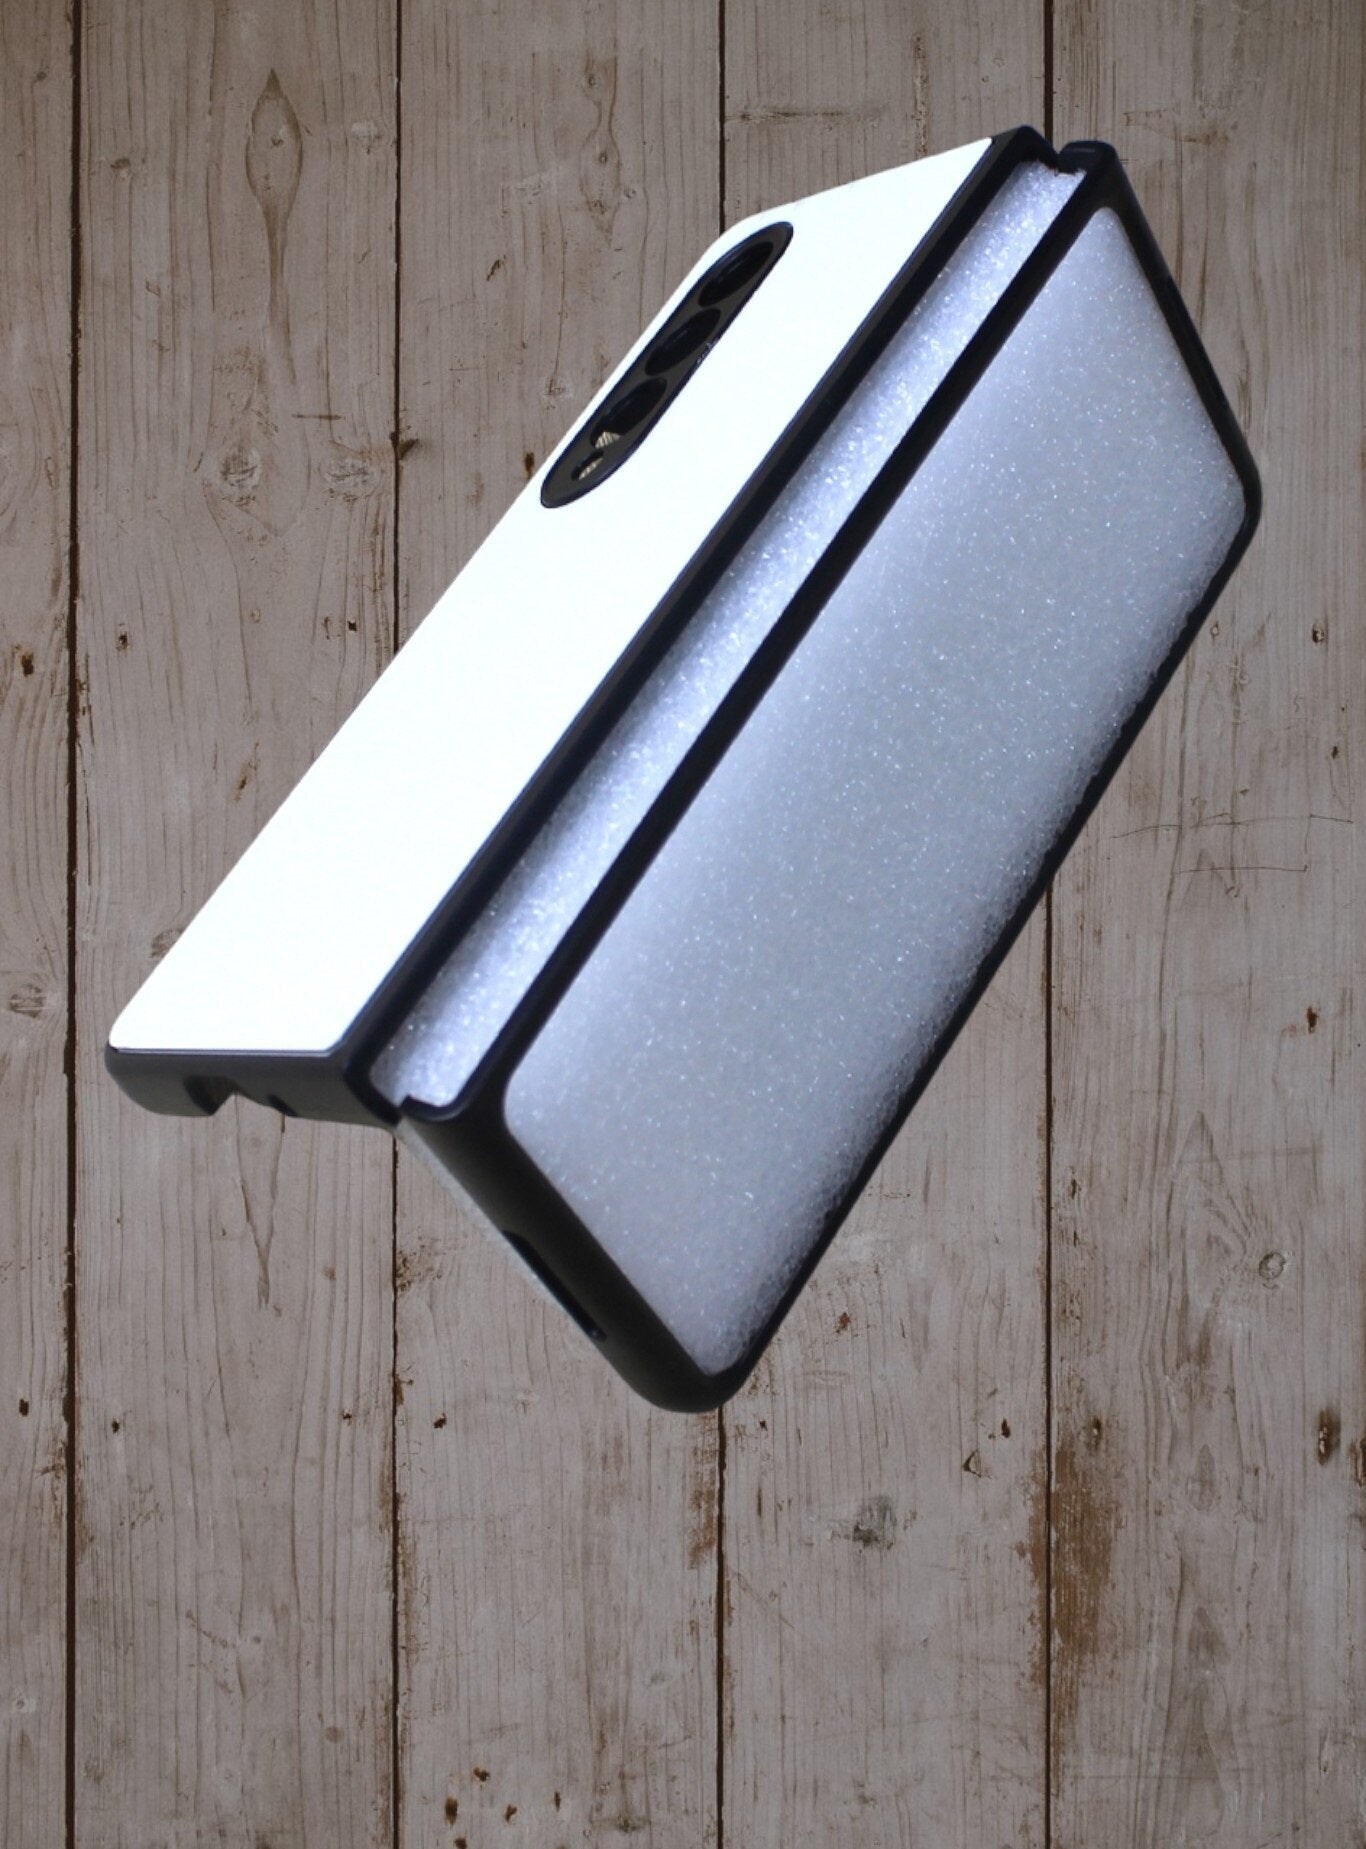 Samsung Galaxy Z Fold case - The simple